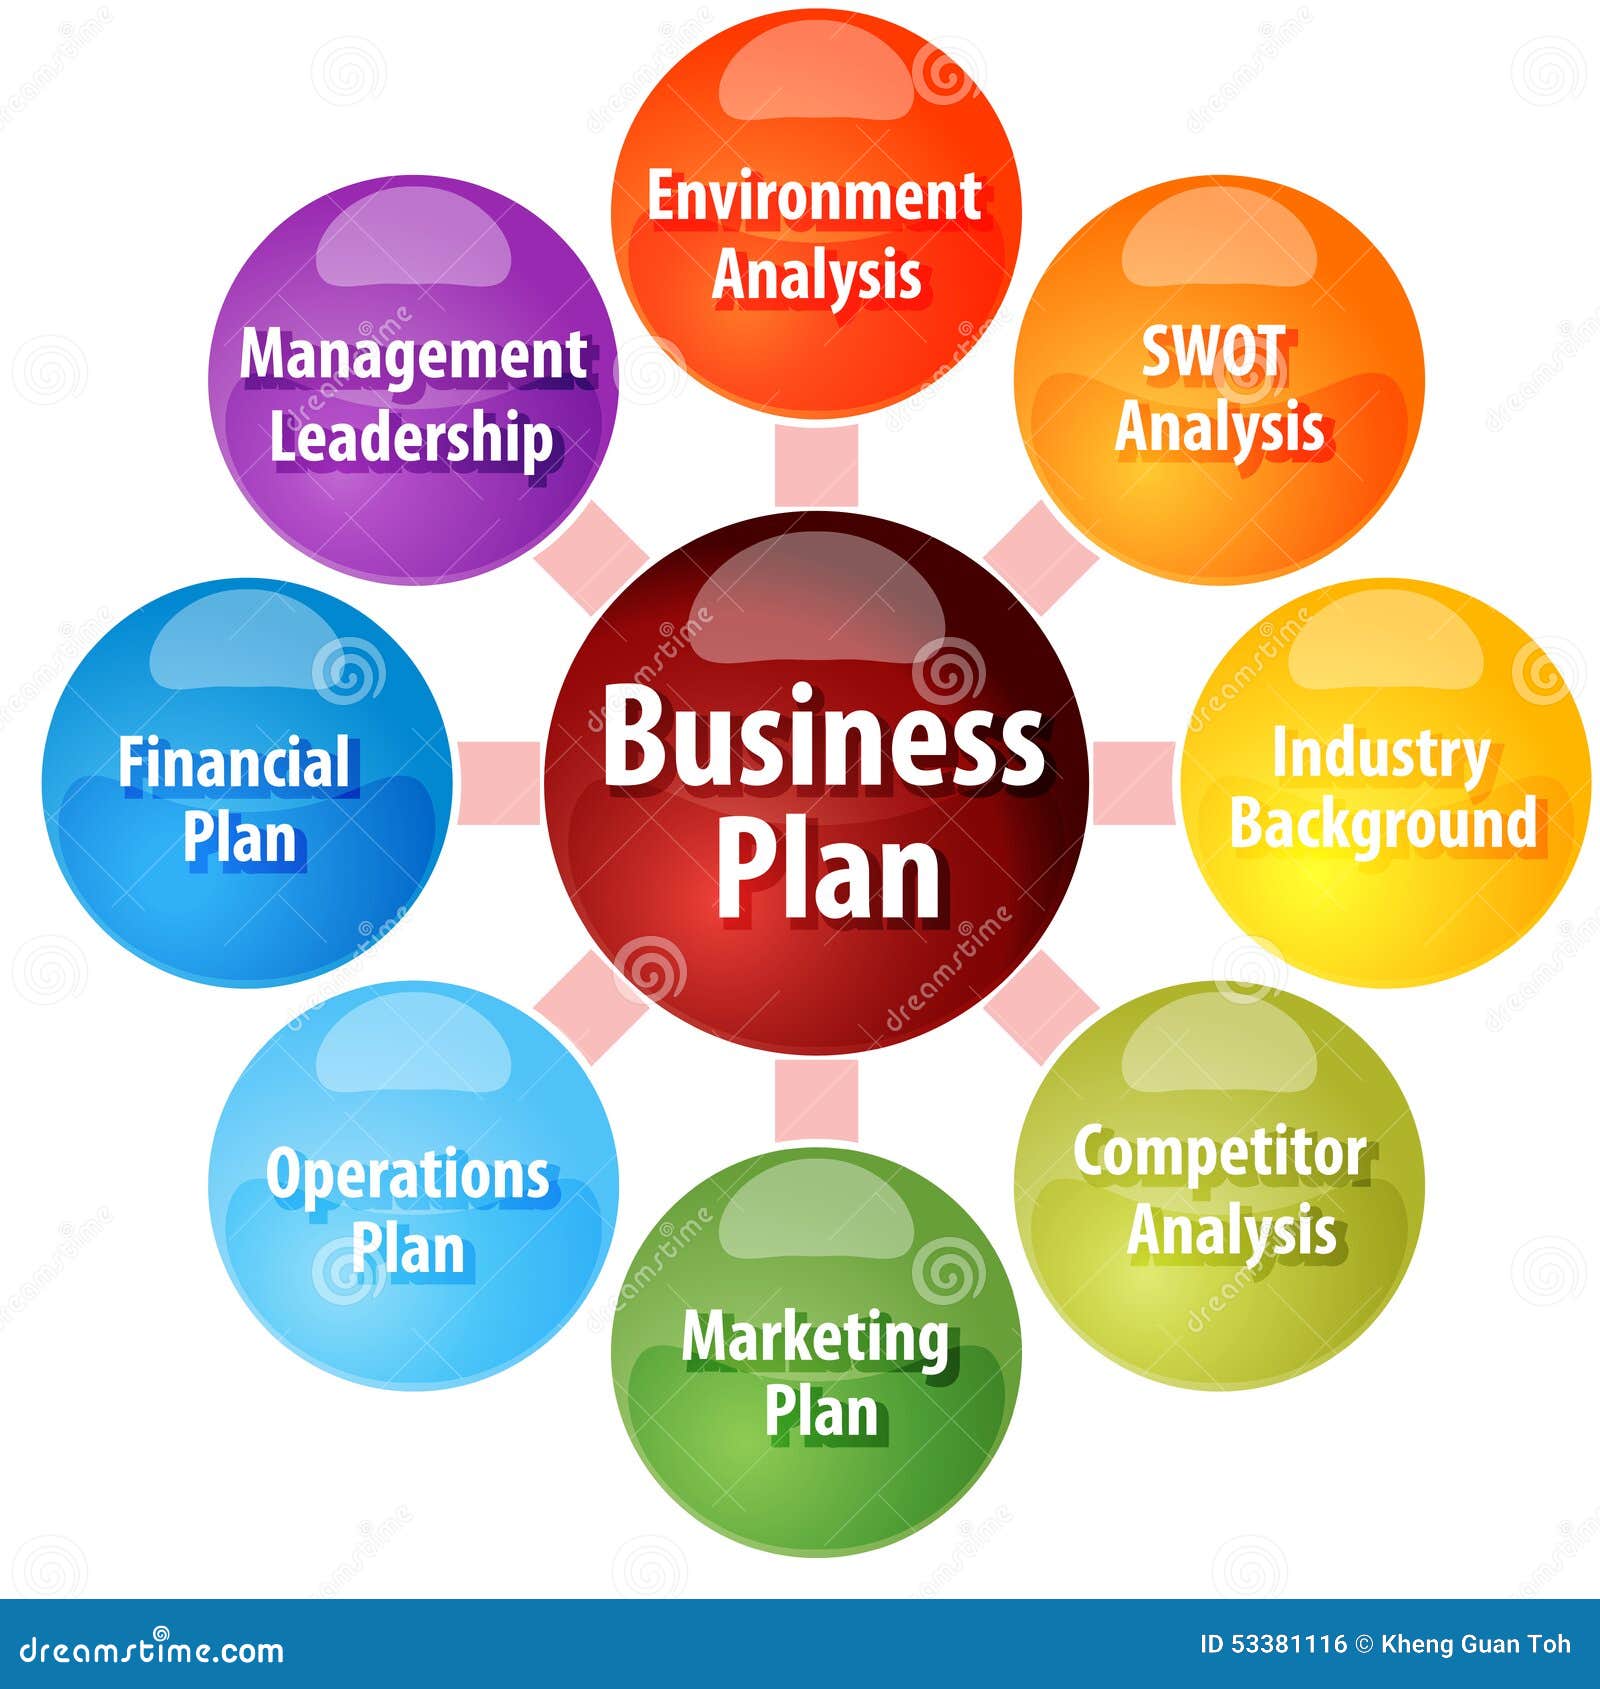 explain the elements of business plan